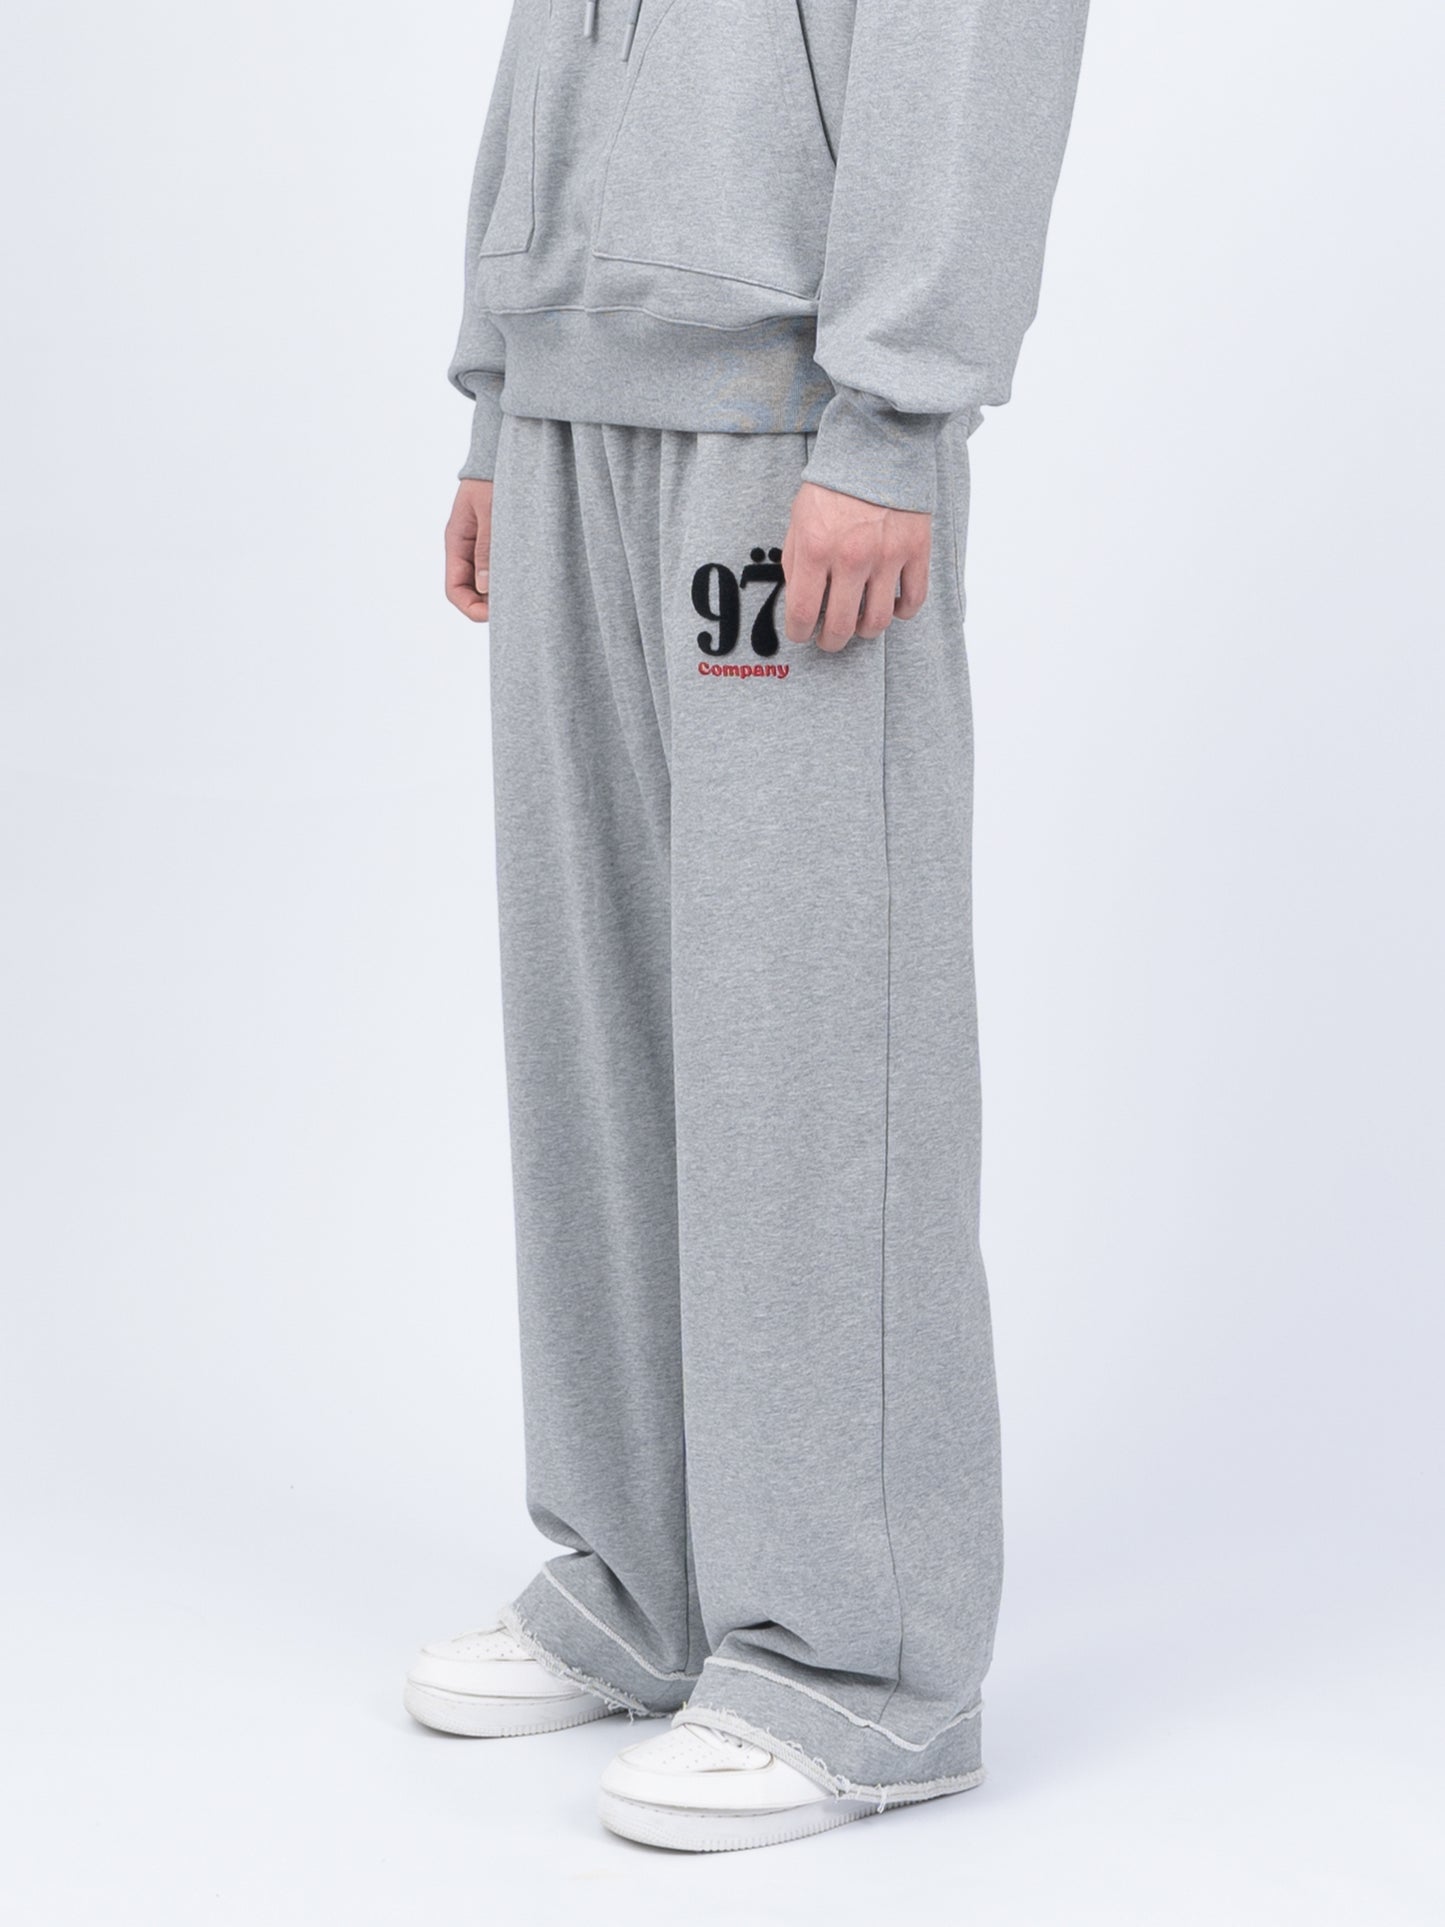 1997shell Stock Logo Sweatpants(Grey)